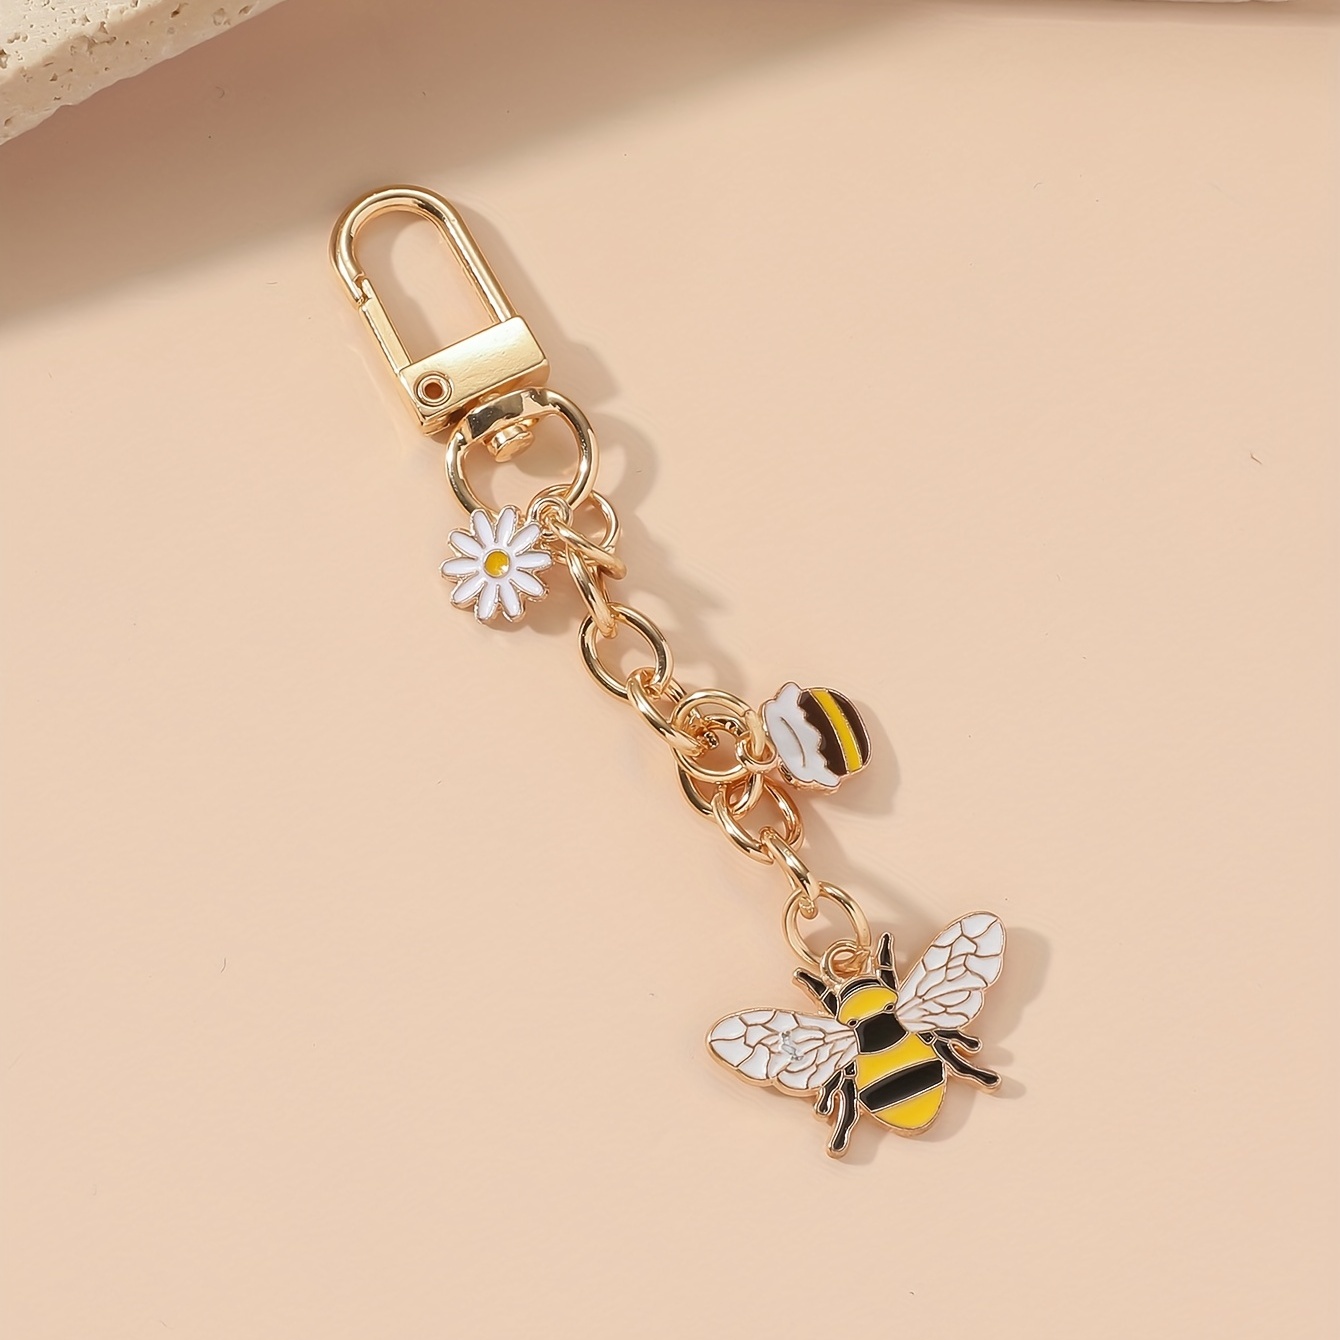 GENEMA Bee Happy Keychain Bee Jewelry Bee Gifts for Bee Lovers Beekeepers  and Teachers 